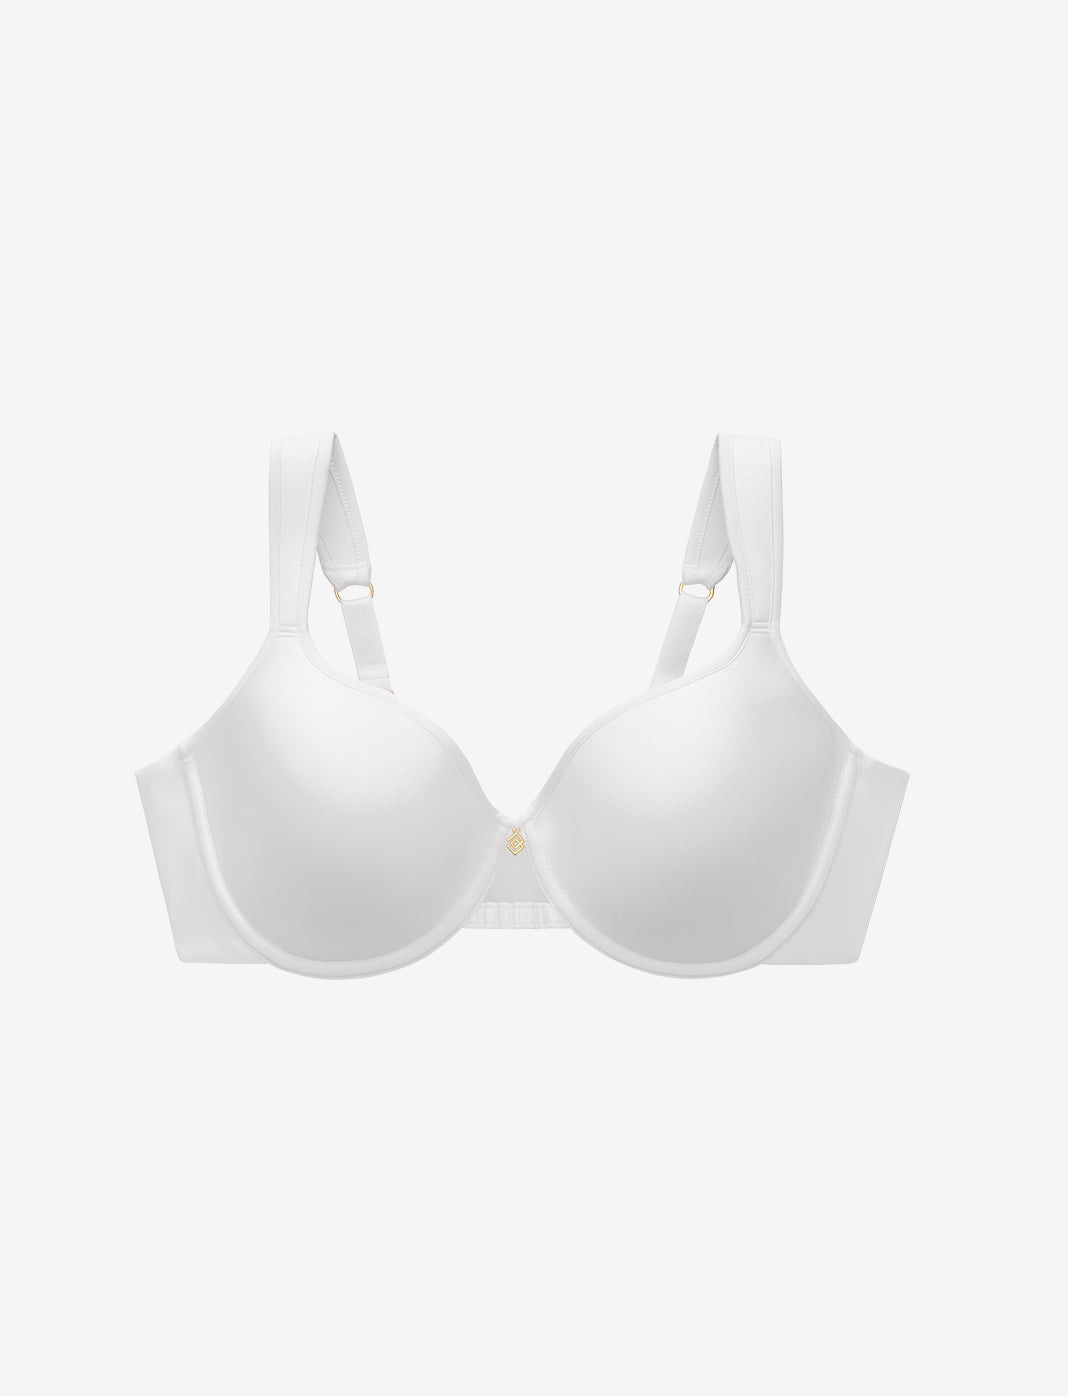 32E Bras: Bras for 32E Boobs and Breast Size Tagged Andorra - HauteFlair